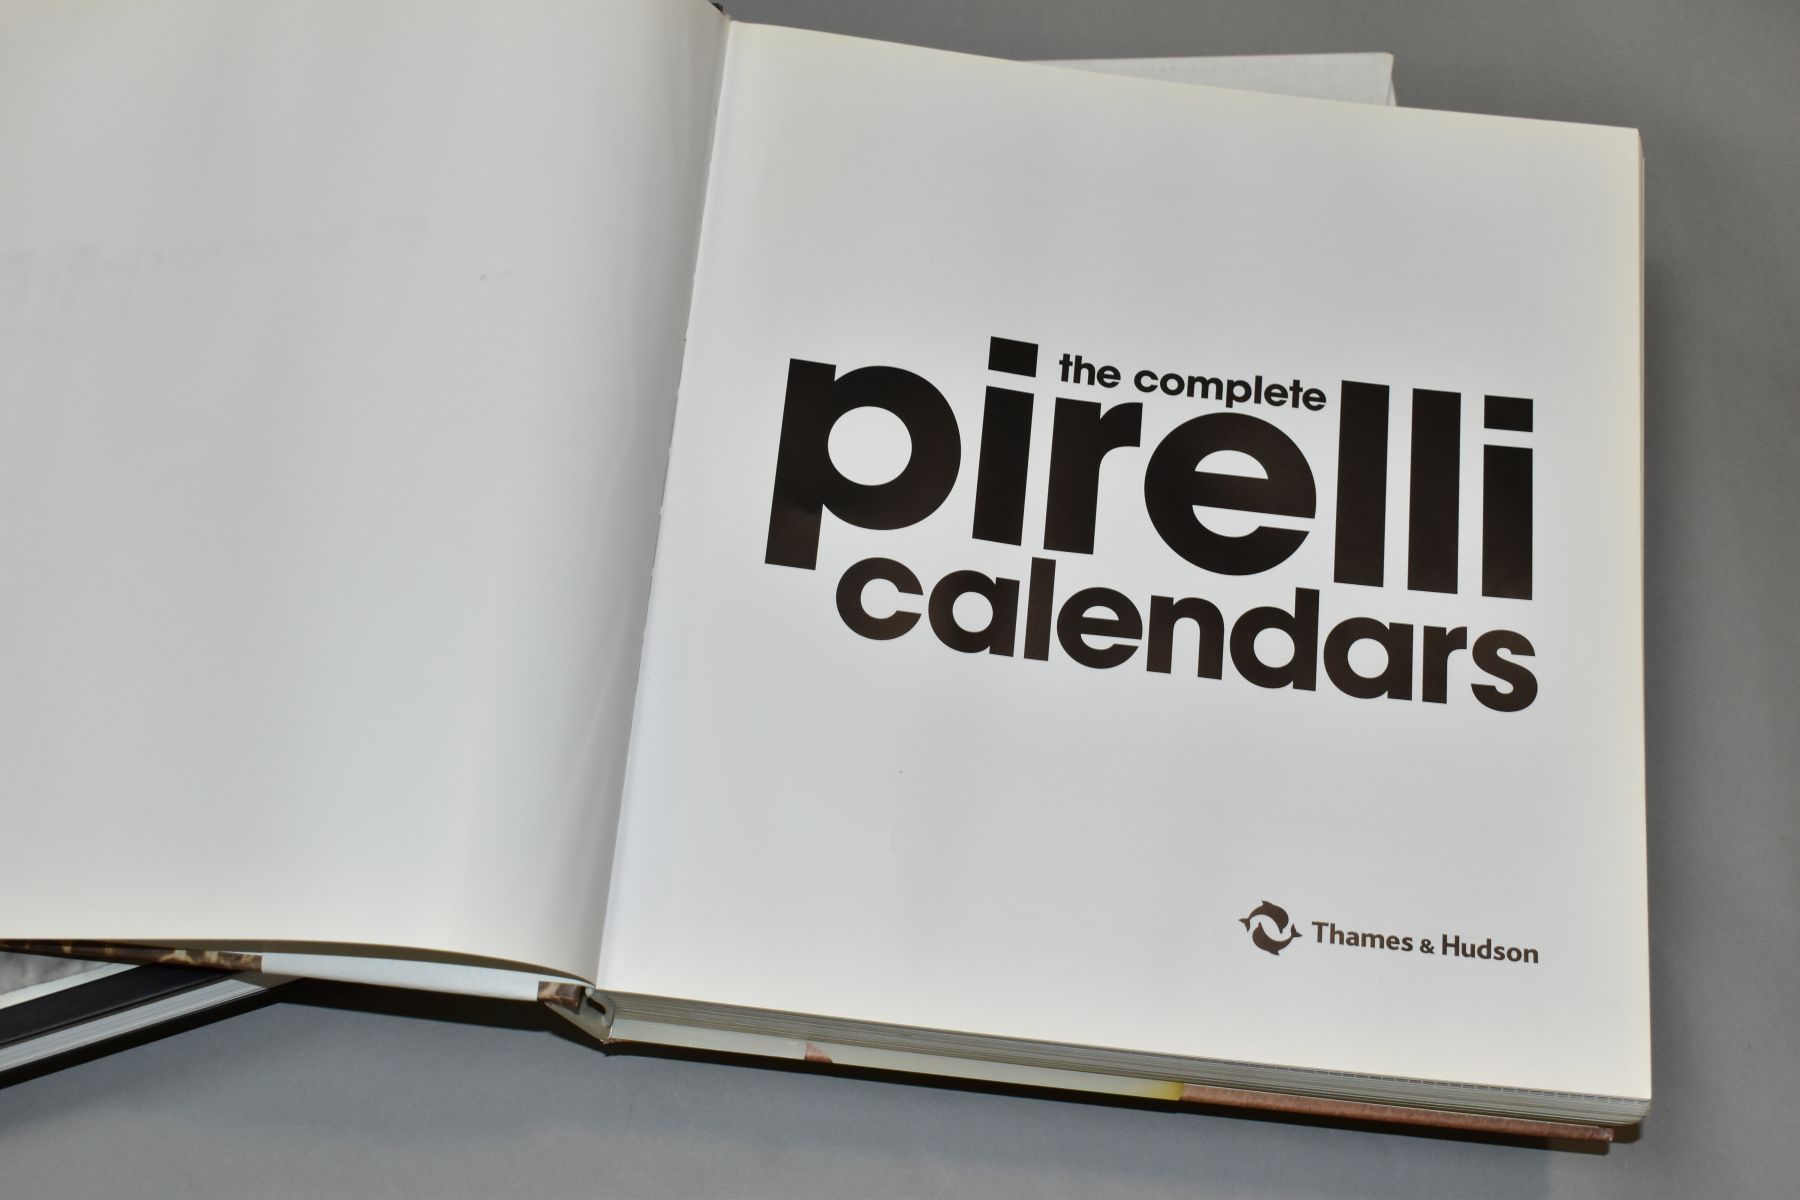 PIRELLI BOOKS, three calendar books, The Complete Pirelli Calendars, published by Thames & Hudson - Image 4 of 6